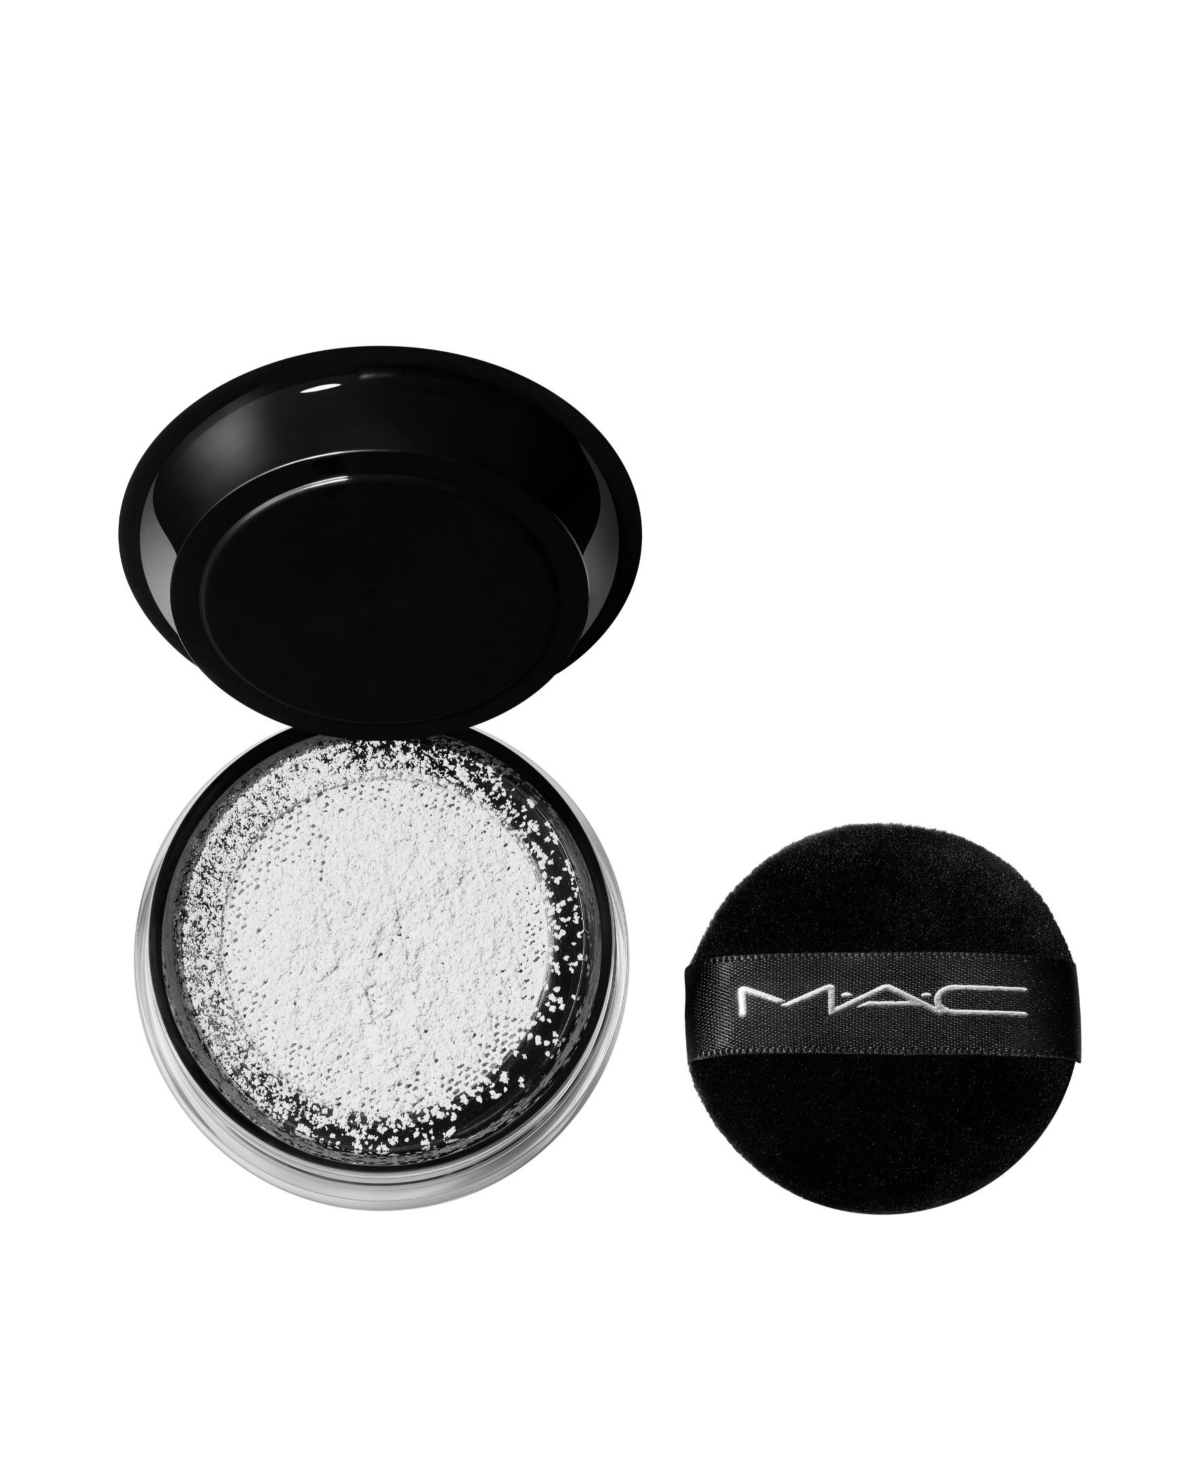 Mac Studio Fix Pro Set + Blur Weightless Loose Powder In Translucent